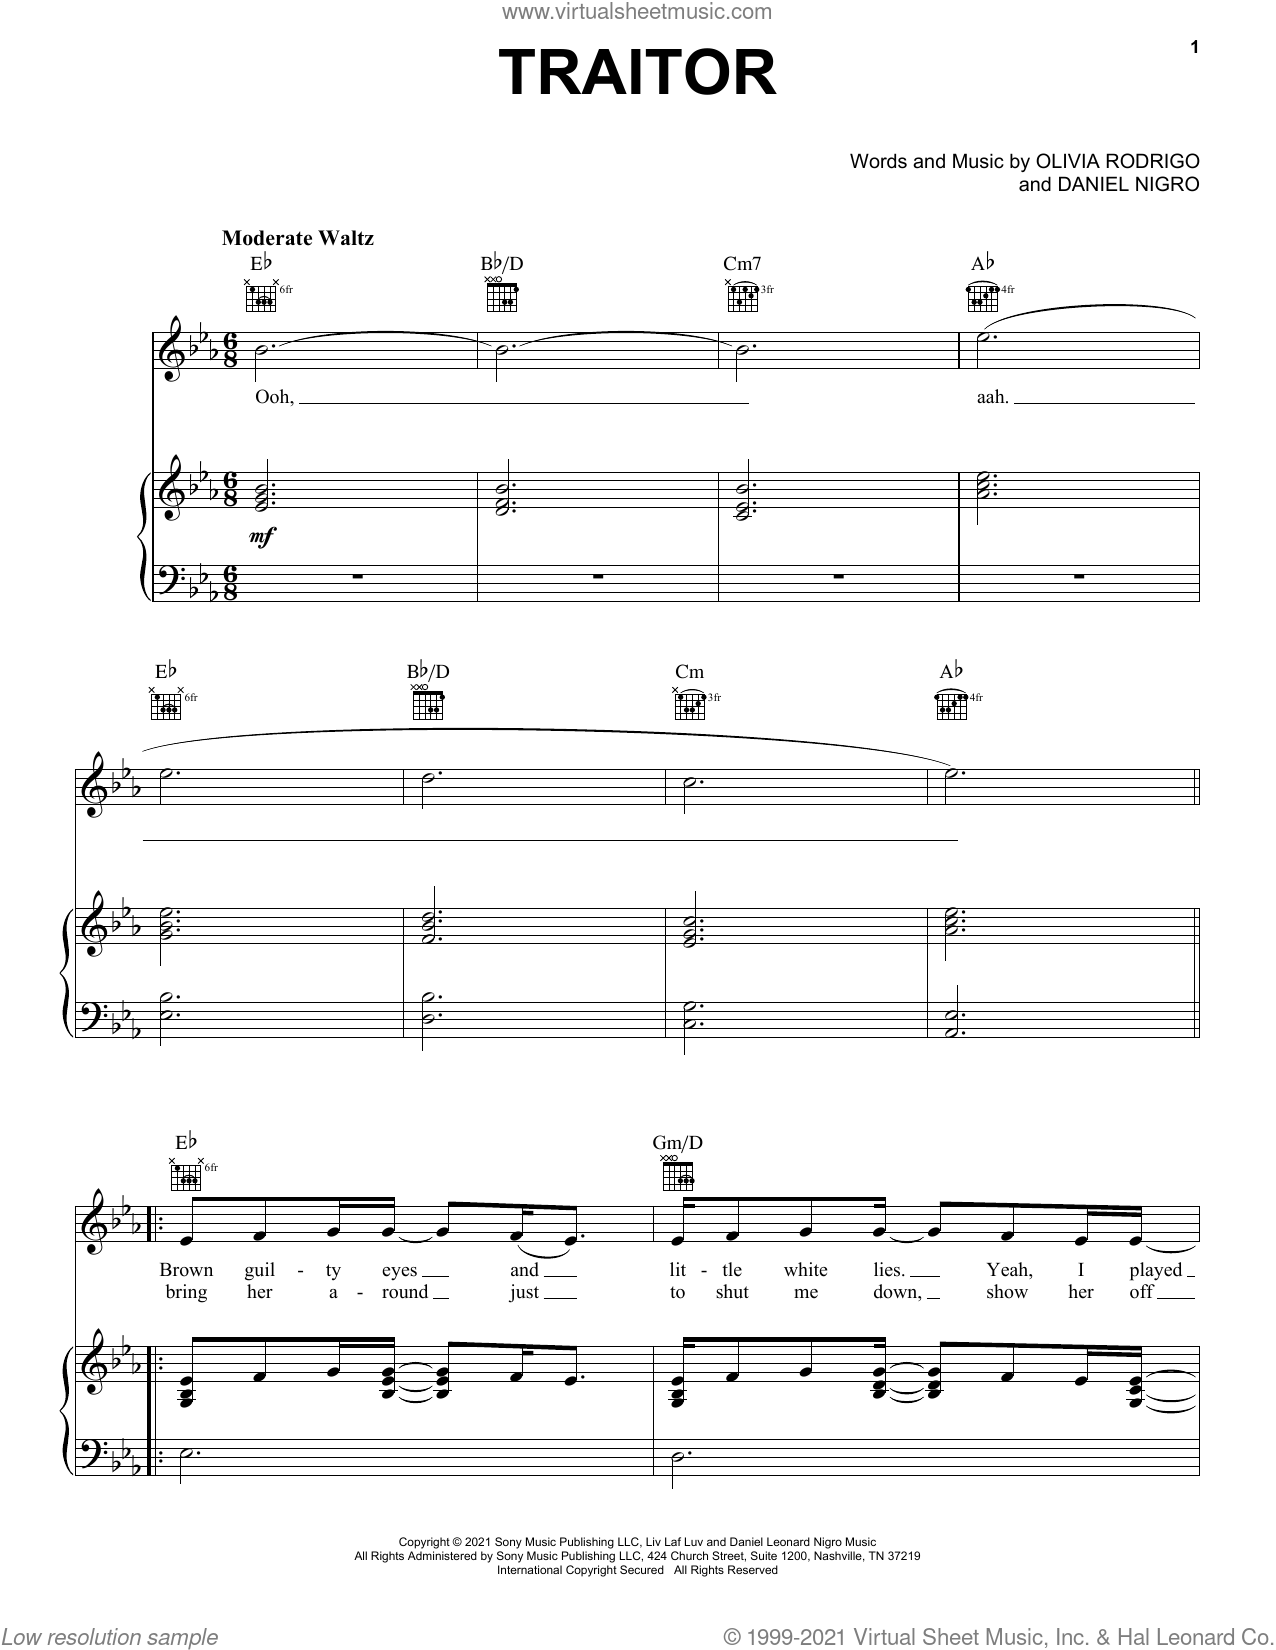 Sheet Music Boss Traitor's Requiem Sheet Music (Piano Solo) in G# Minor -  Download & Print - SKU: MN0200266